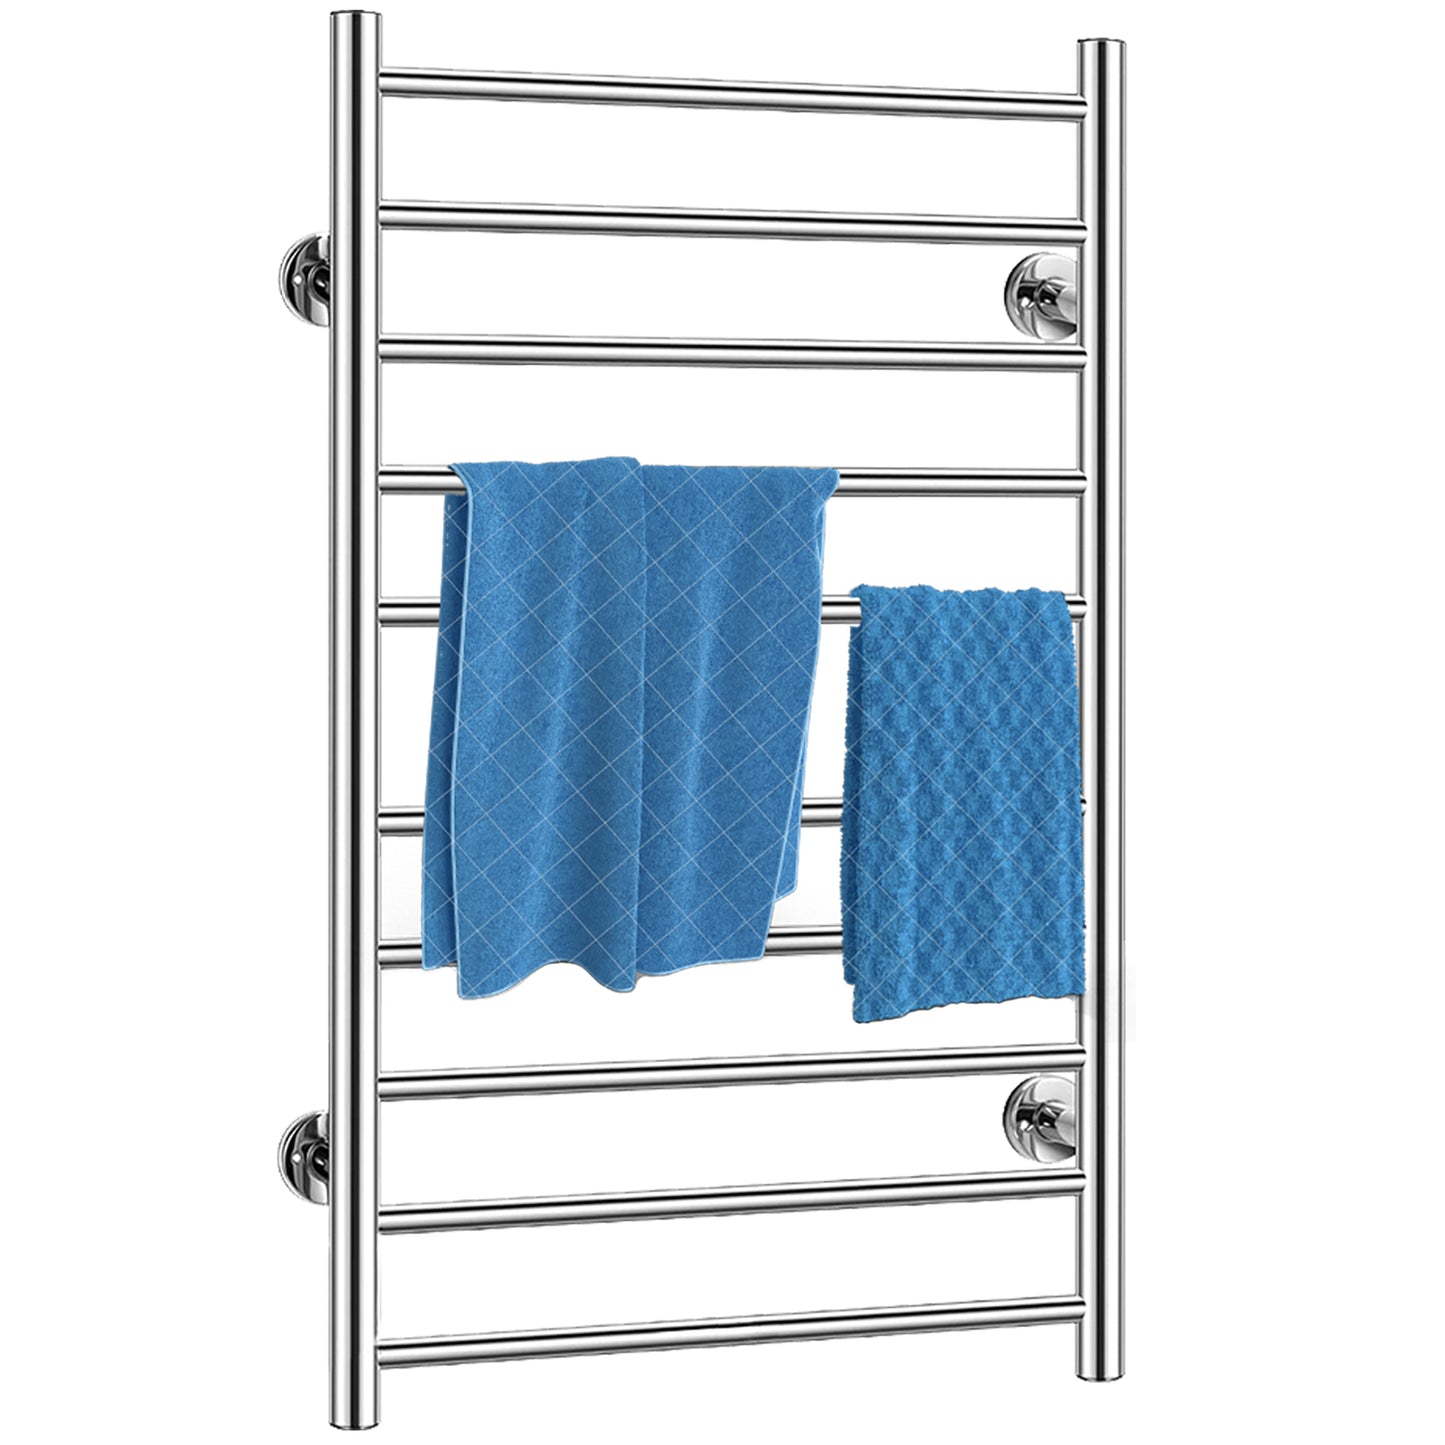 Electric Heated Towel Rack for Bathroom Wall Mounted Towel Warmer 10 Stainless Steel Bars Drying Rack